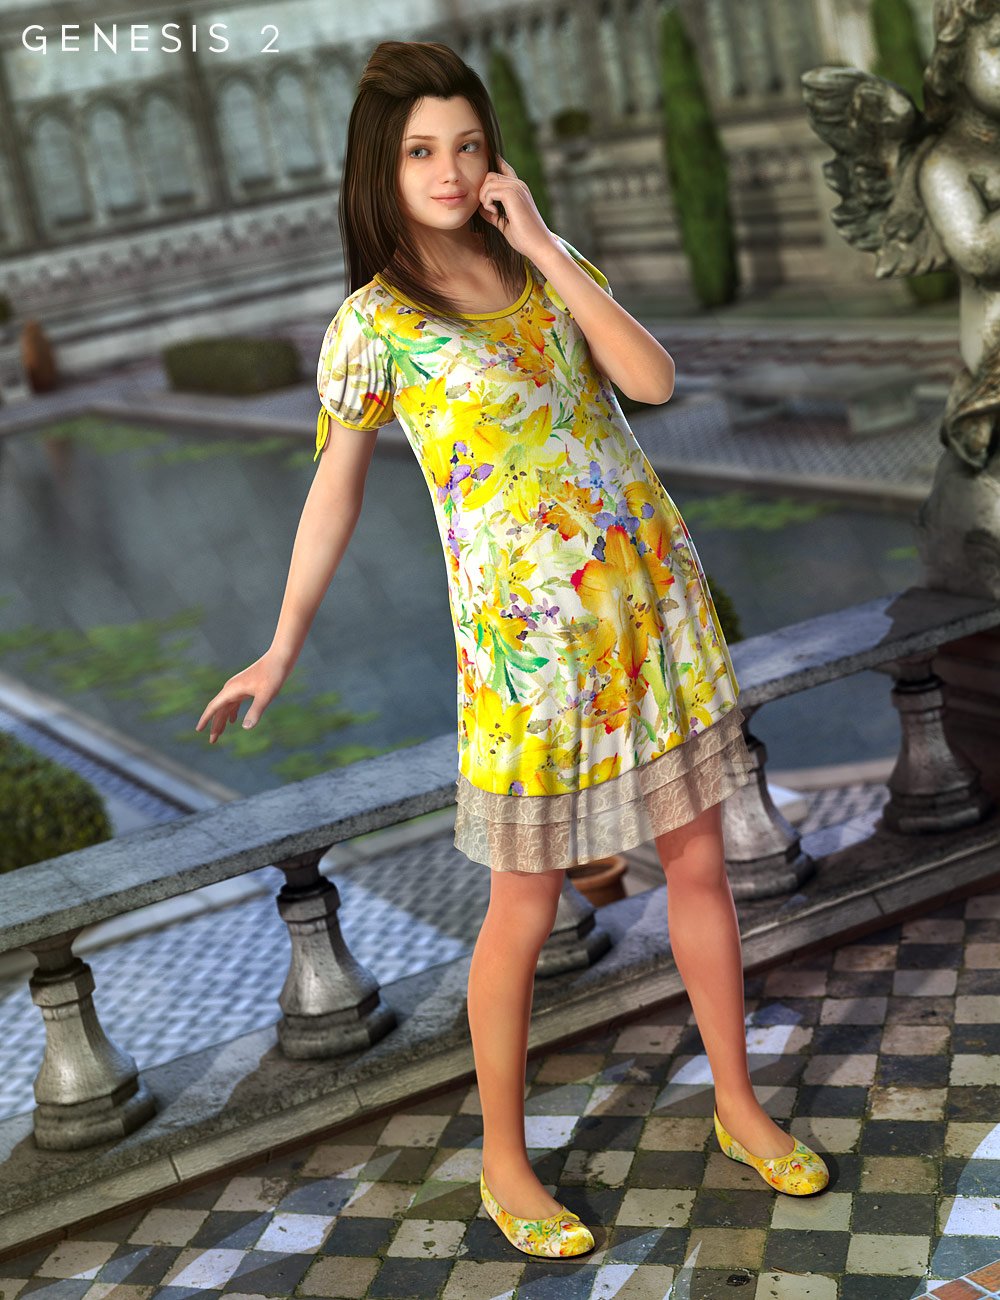 Memories of Summer for Genesis 2 Female(s) by: 4blueyes, 3D Models by Daz 3D